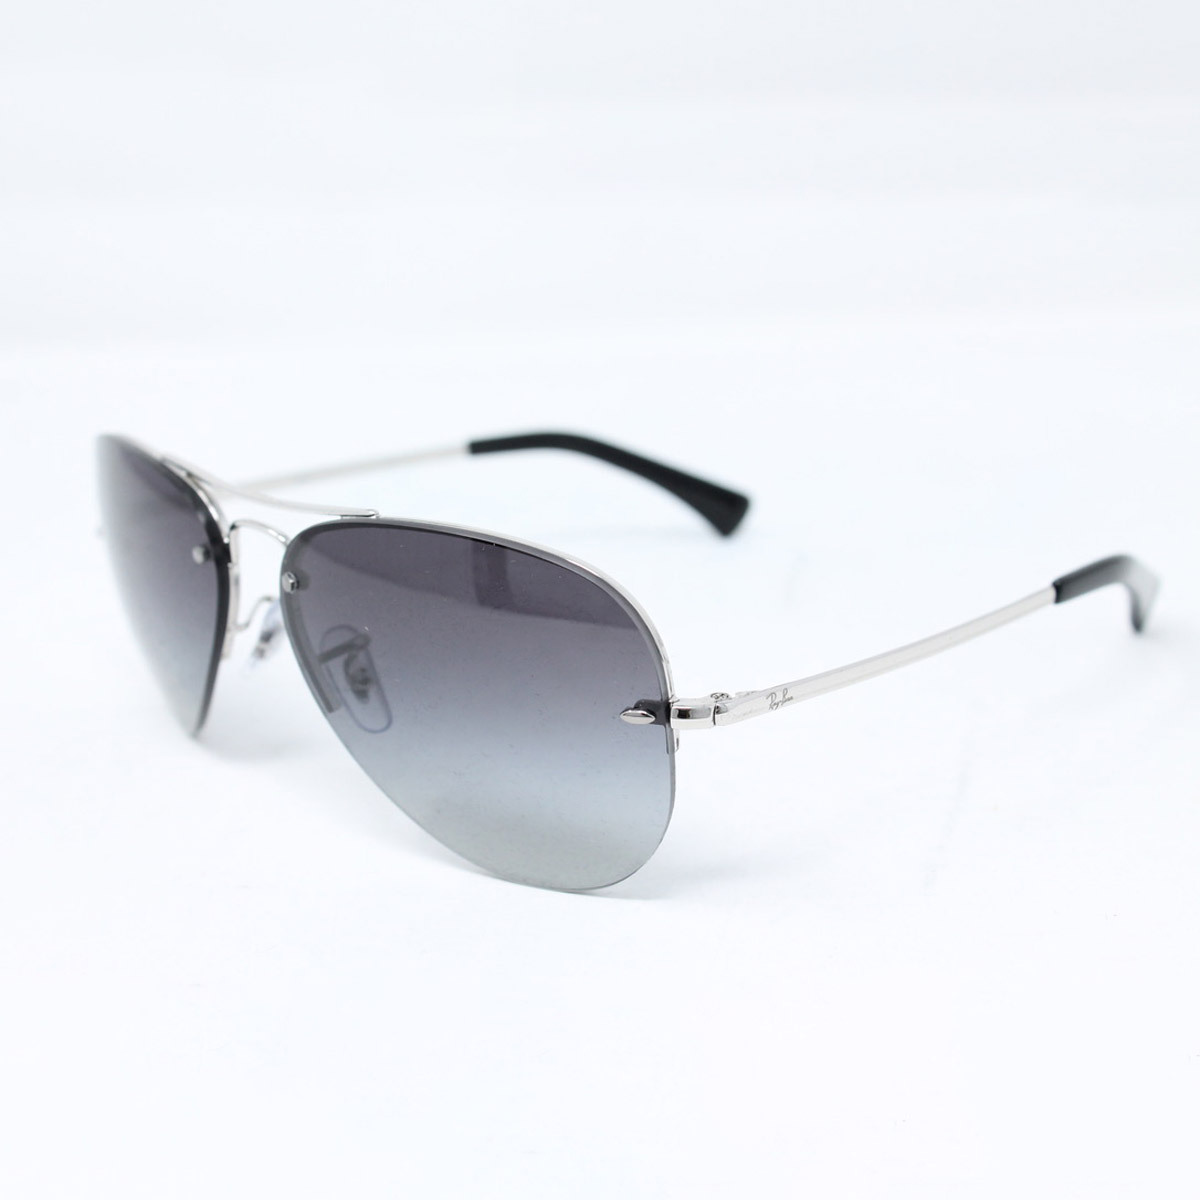 Ray-Ban Chrome Metal Sunglasses with Grey Lenses, RB3449 0038G